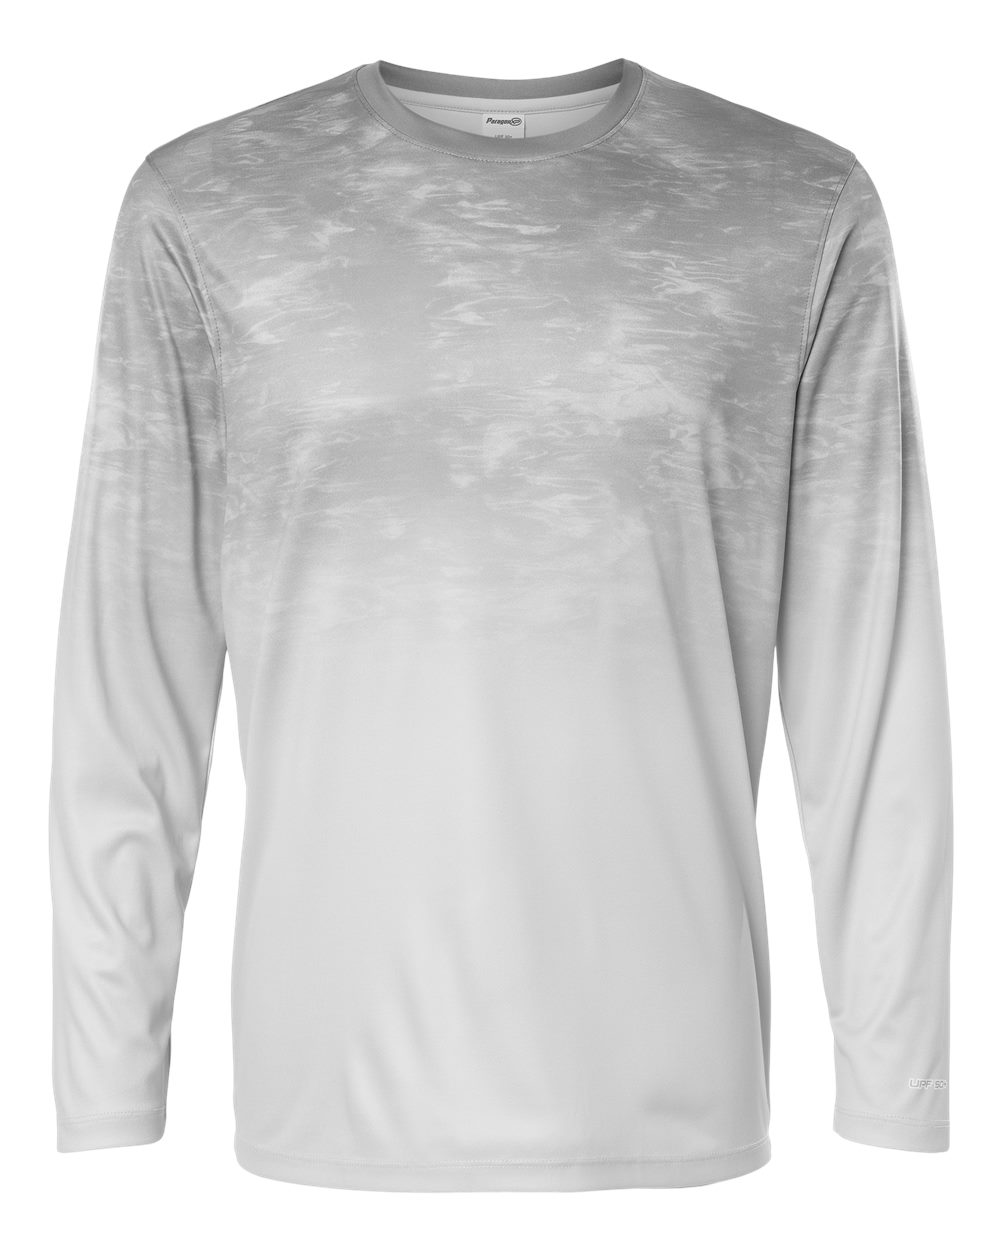 Paragon 229 - Montauk Oceanic Fade Performance Long Sleeve T-Shirt